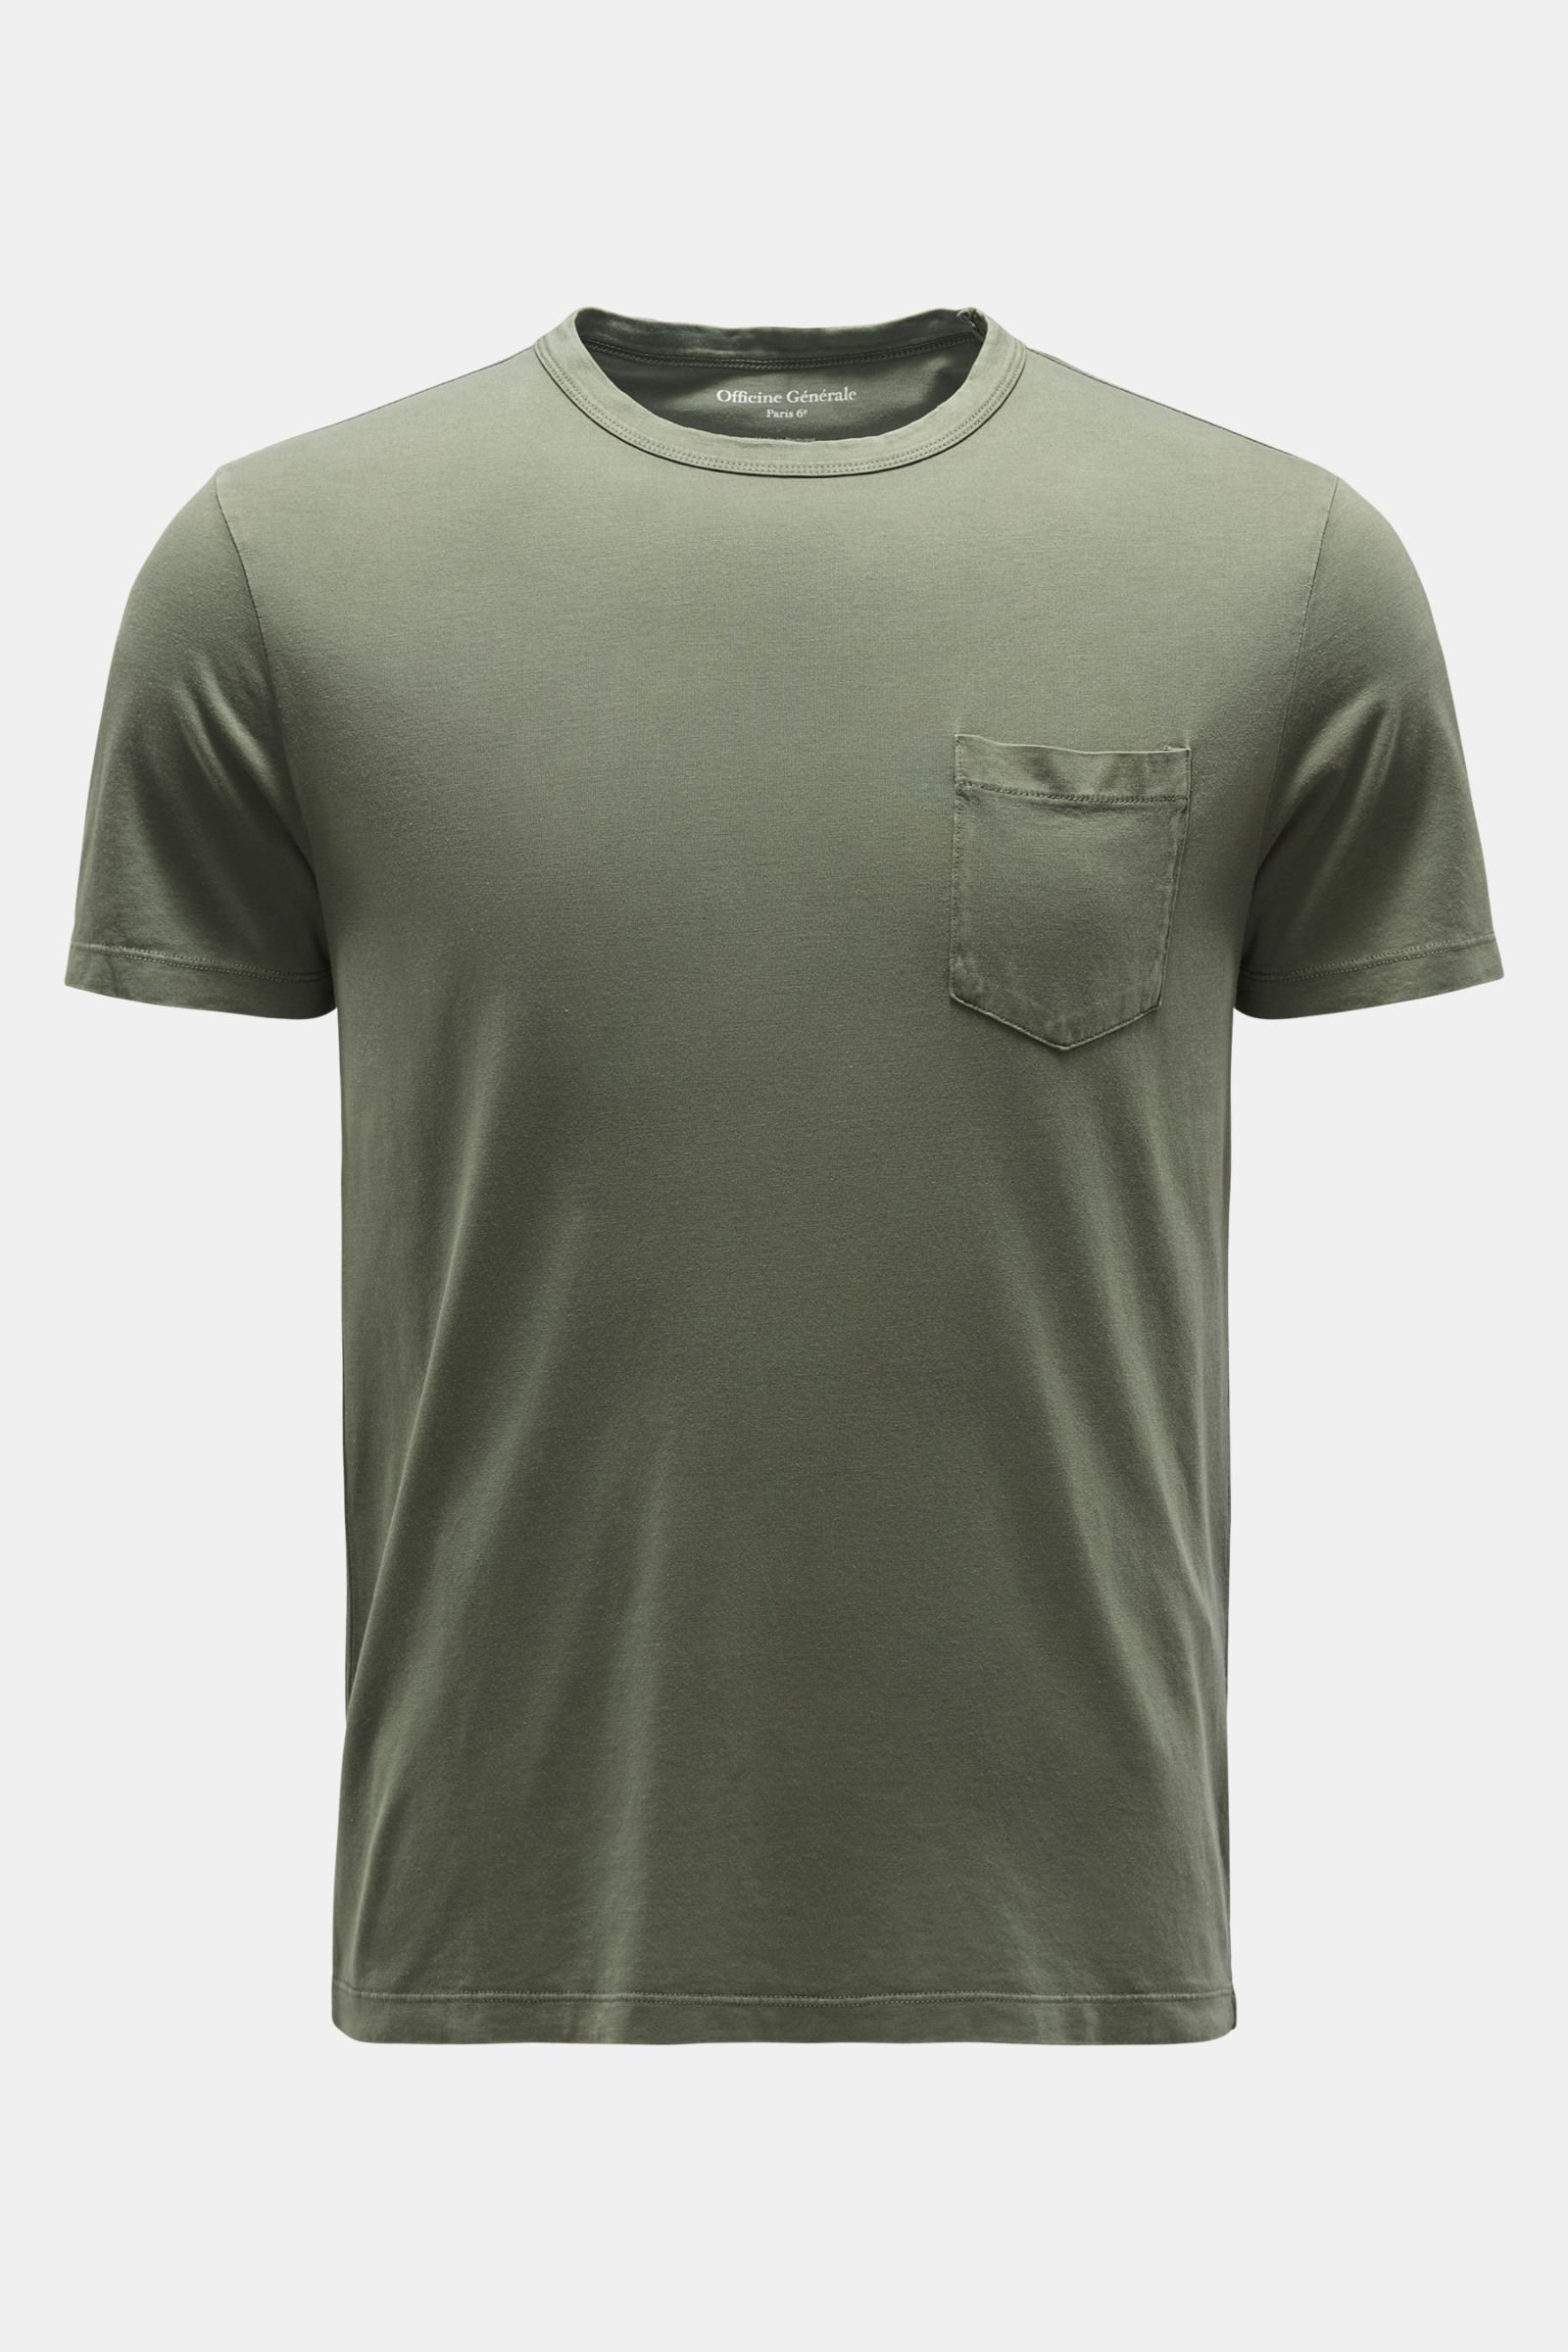 Crew neck T-shirt 'Tee' grey-green